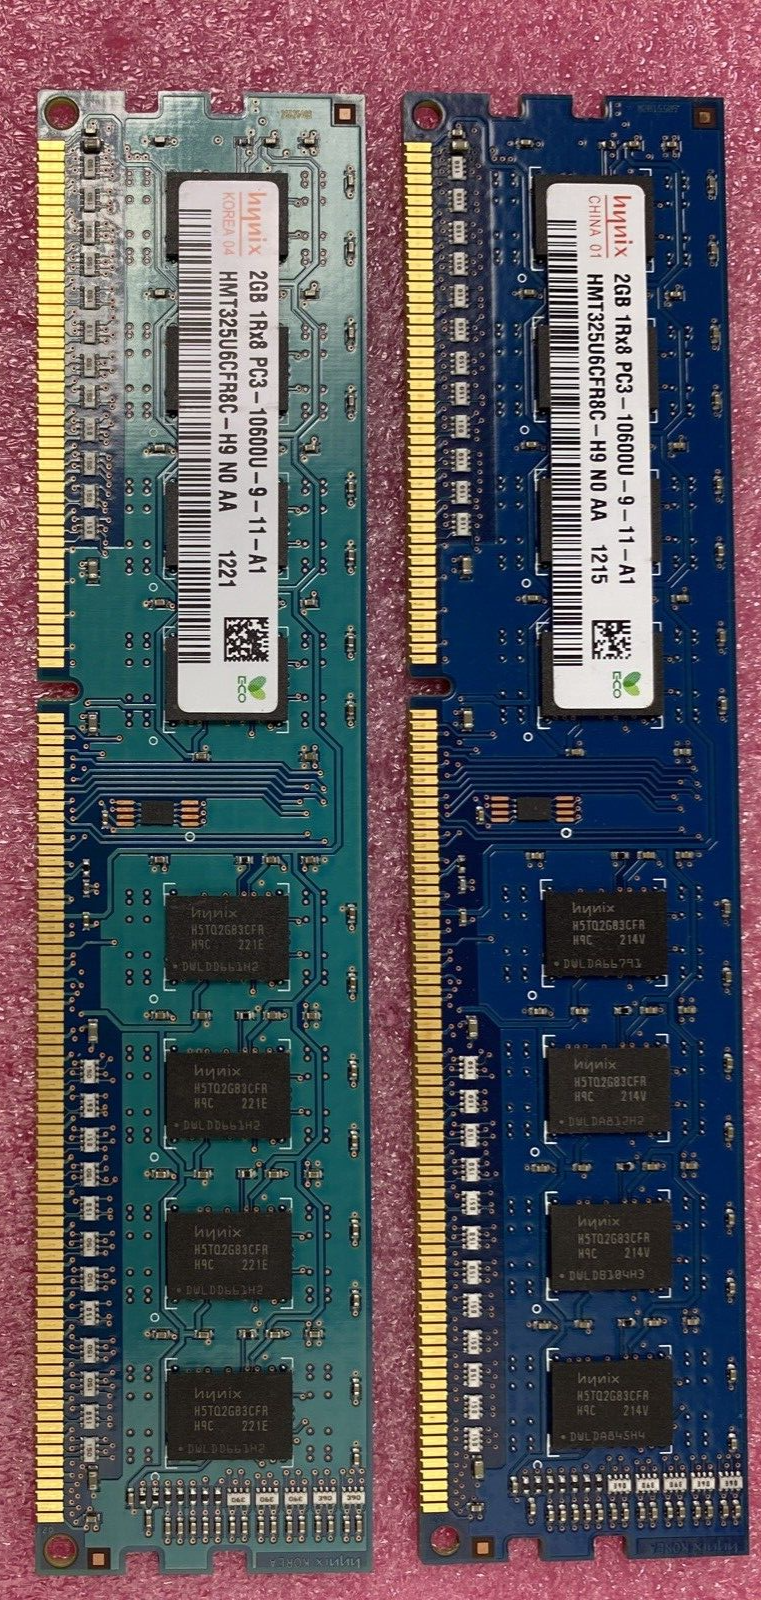 Lot of ( 2 ) 2GB Hynix HMT325U6CFR8C-H9 10600U Desktop RAM DDR3 1RX8